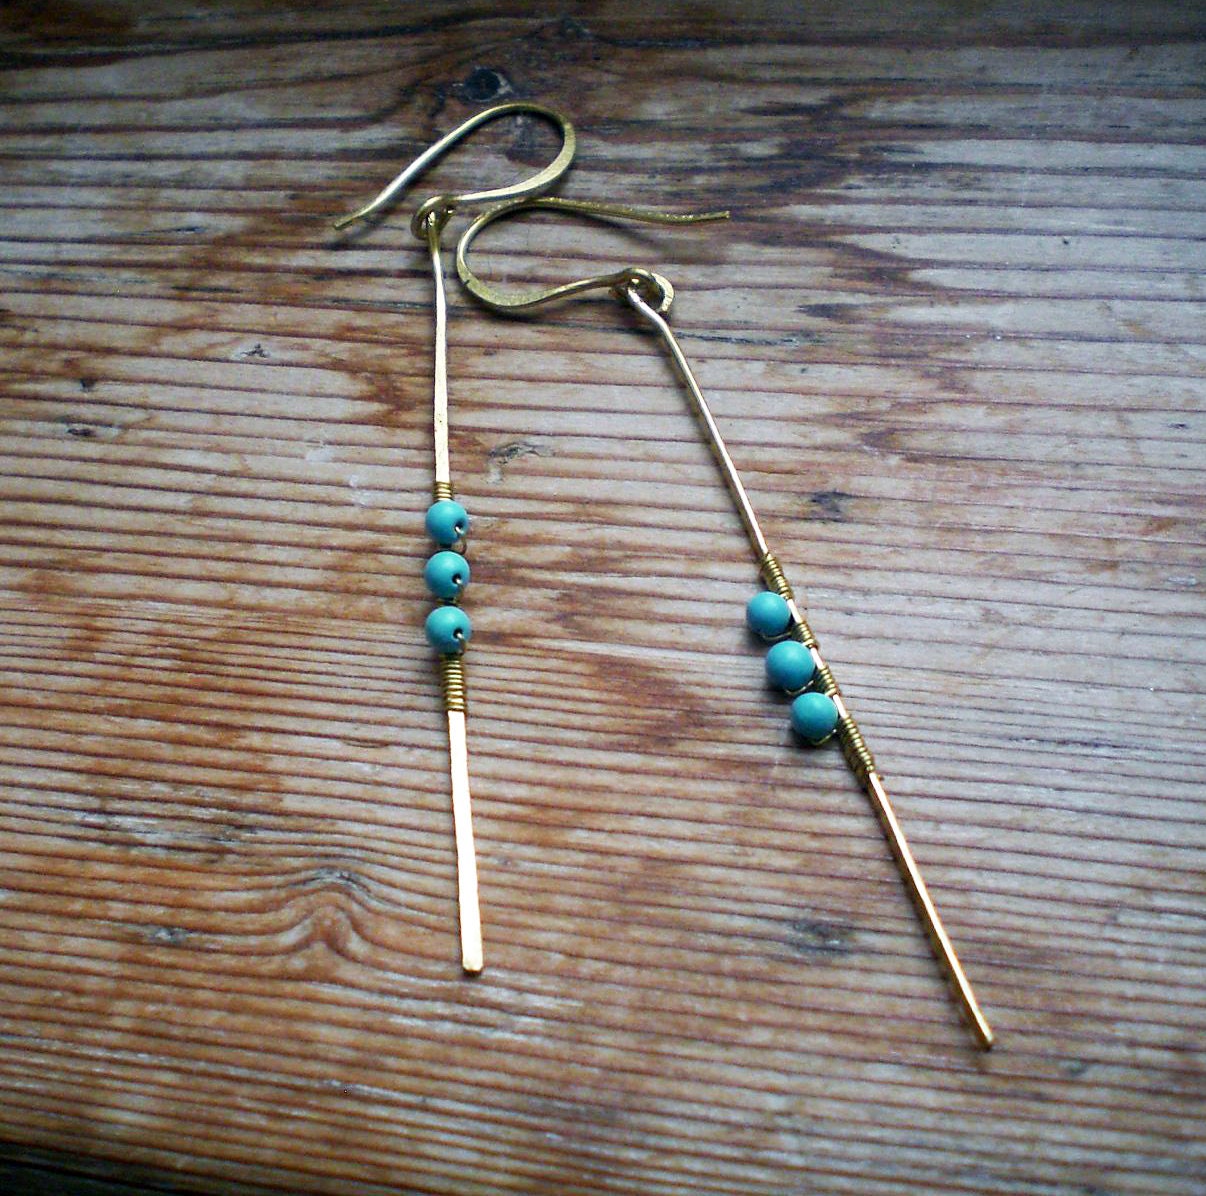 Turquoise earrings // brass earrings // turquoise jewelry